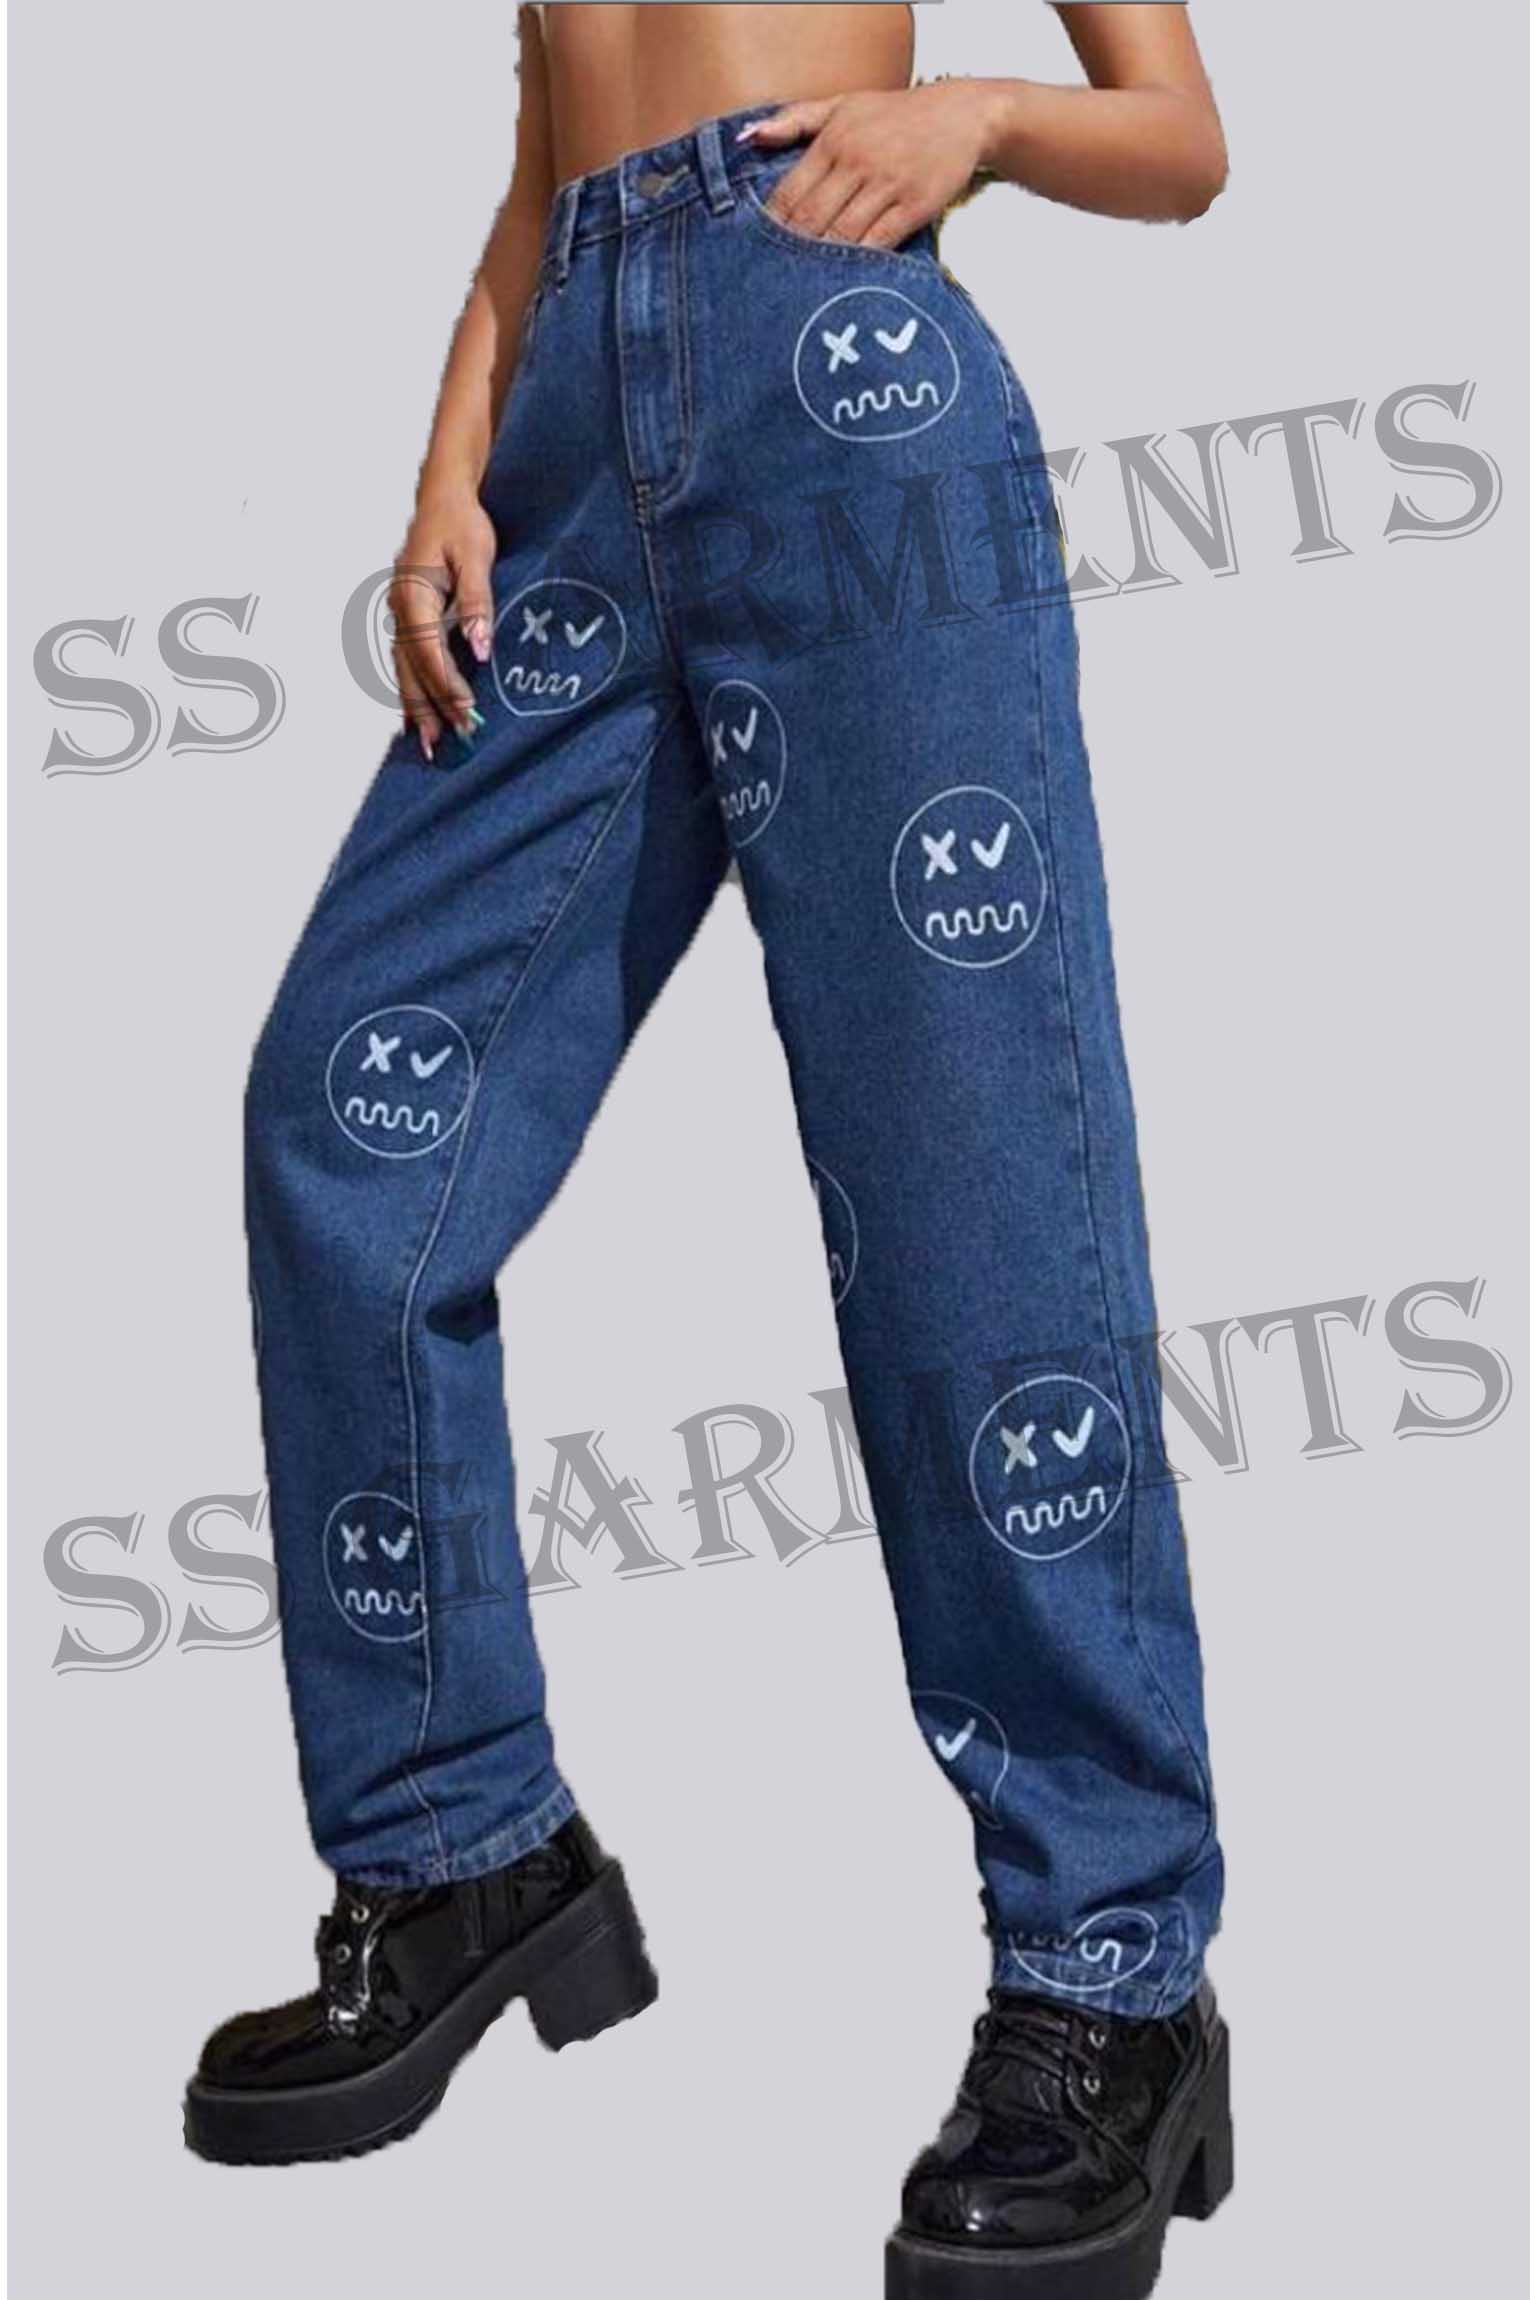 Emoji Printed Denim Jeans with Cotton and Nylon Soft Fabric